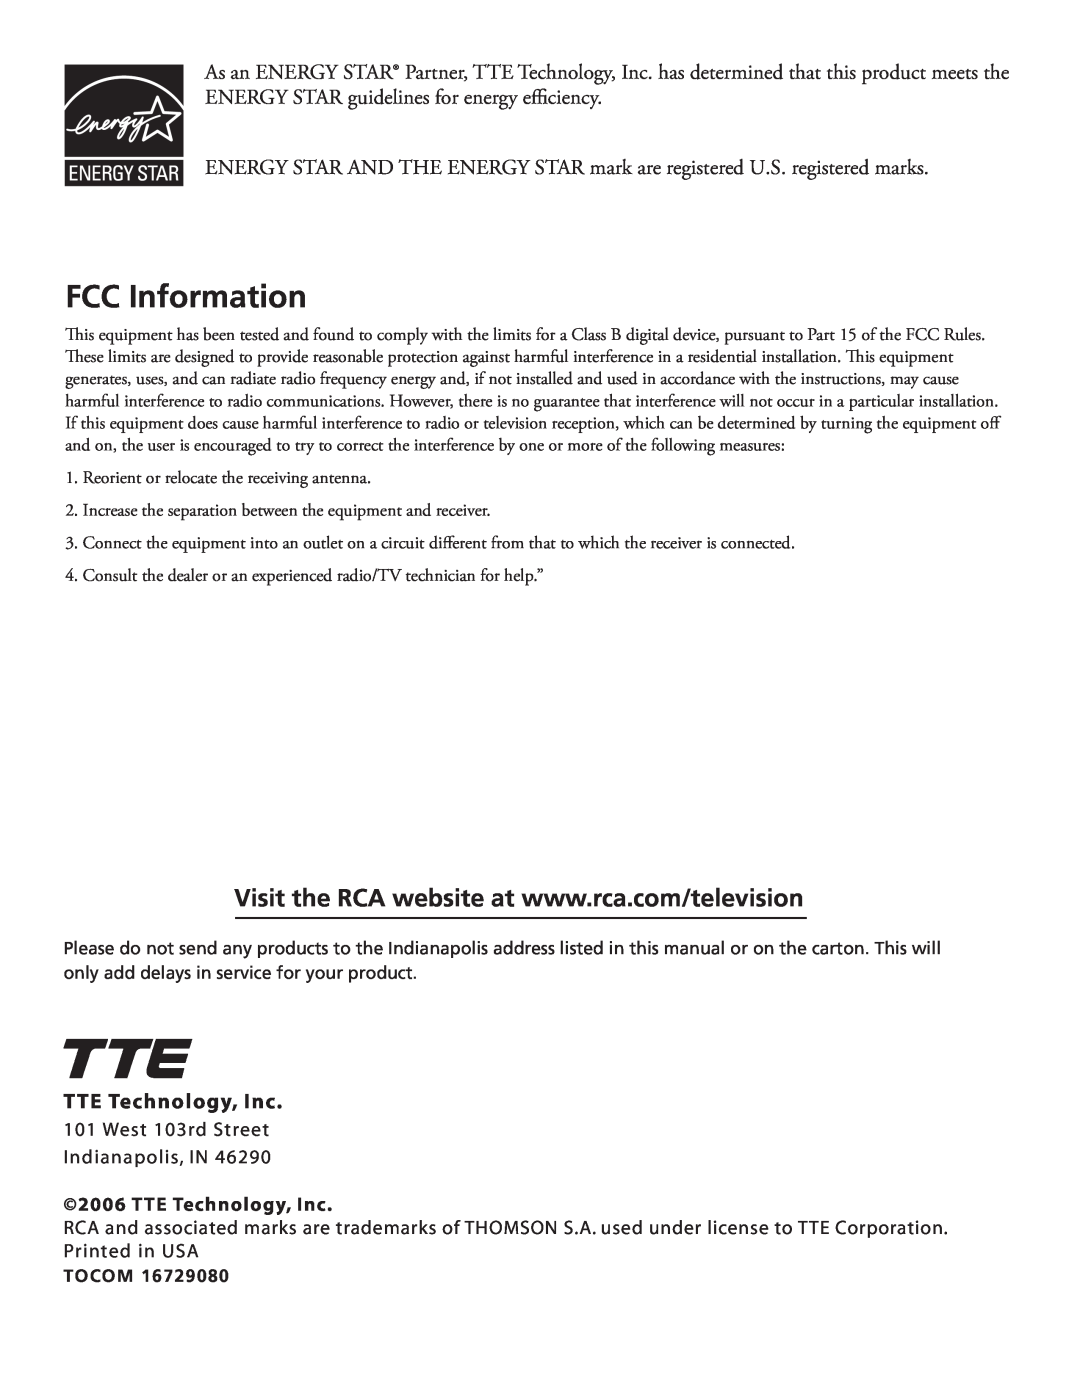 RCA J27F636 manual FCC Information, TTE Technology, Inc 